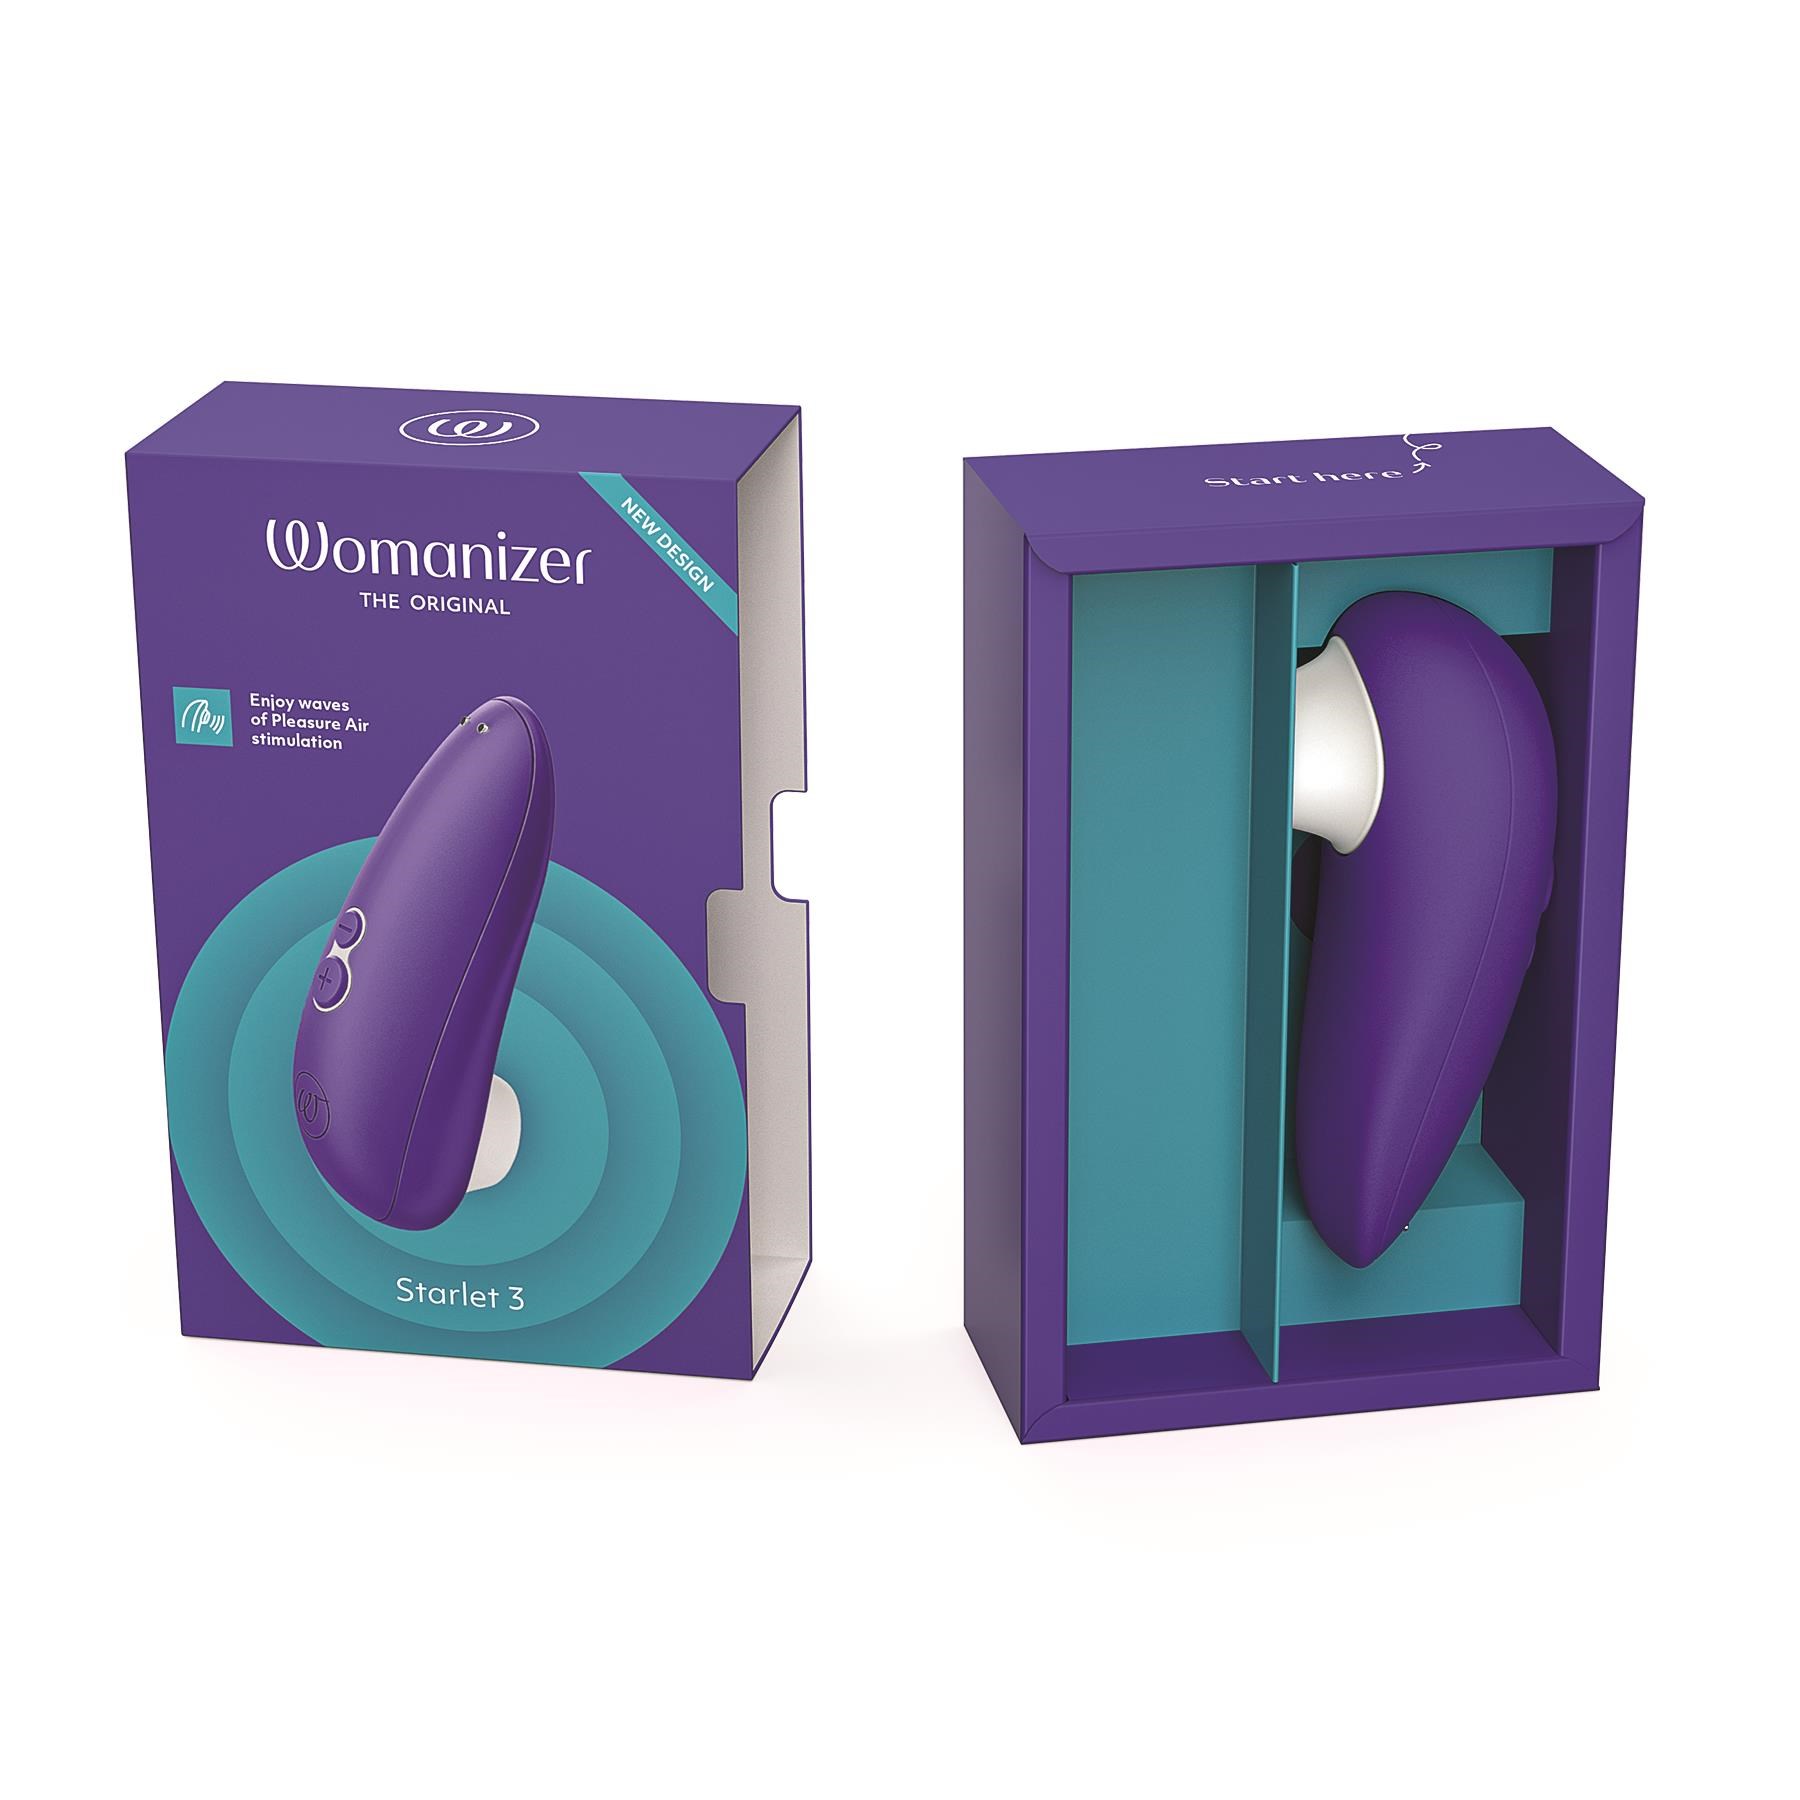 Womanizer Starlet 3 Clitoral Stimulator Open Packaging Shot - Blue